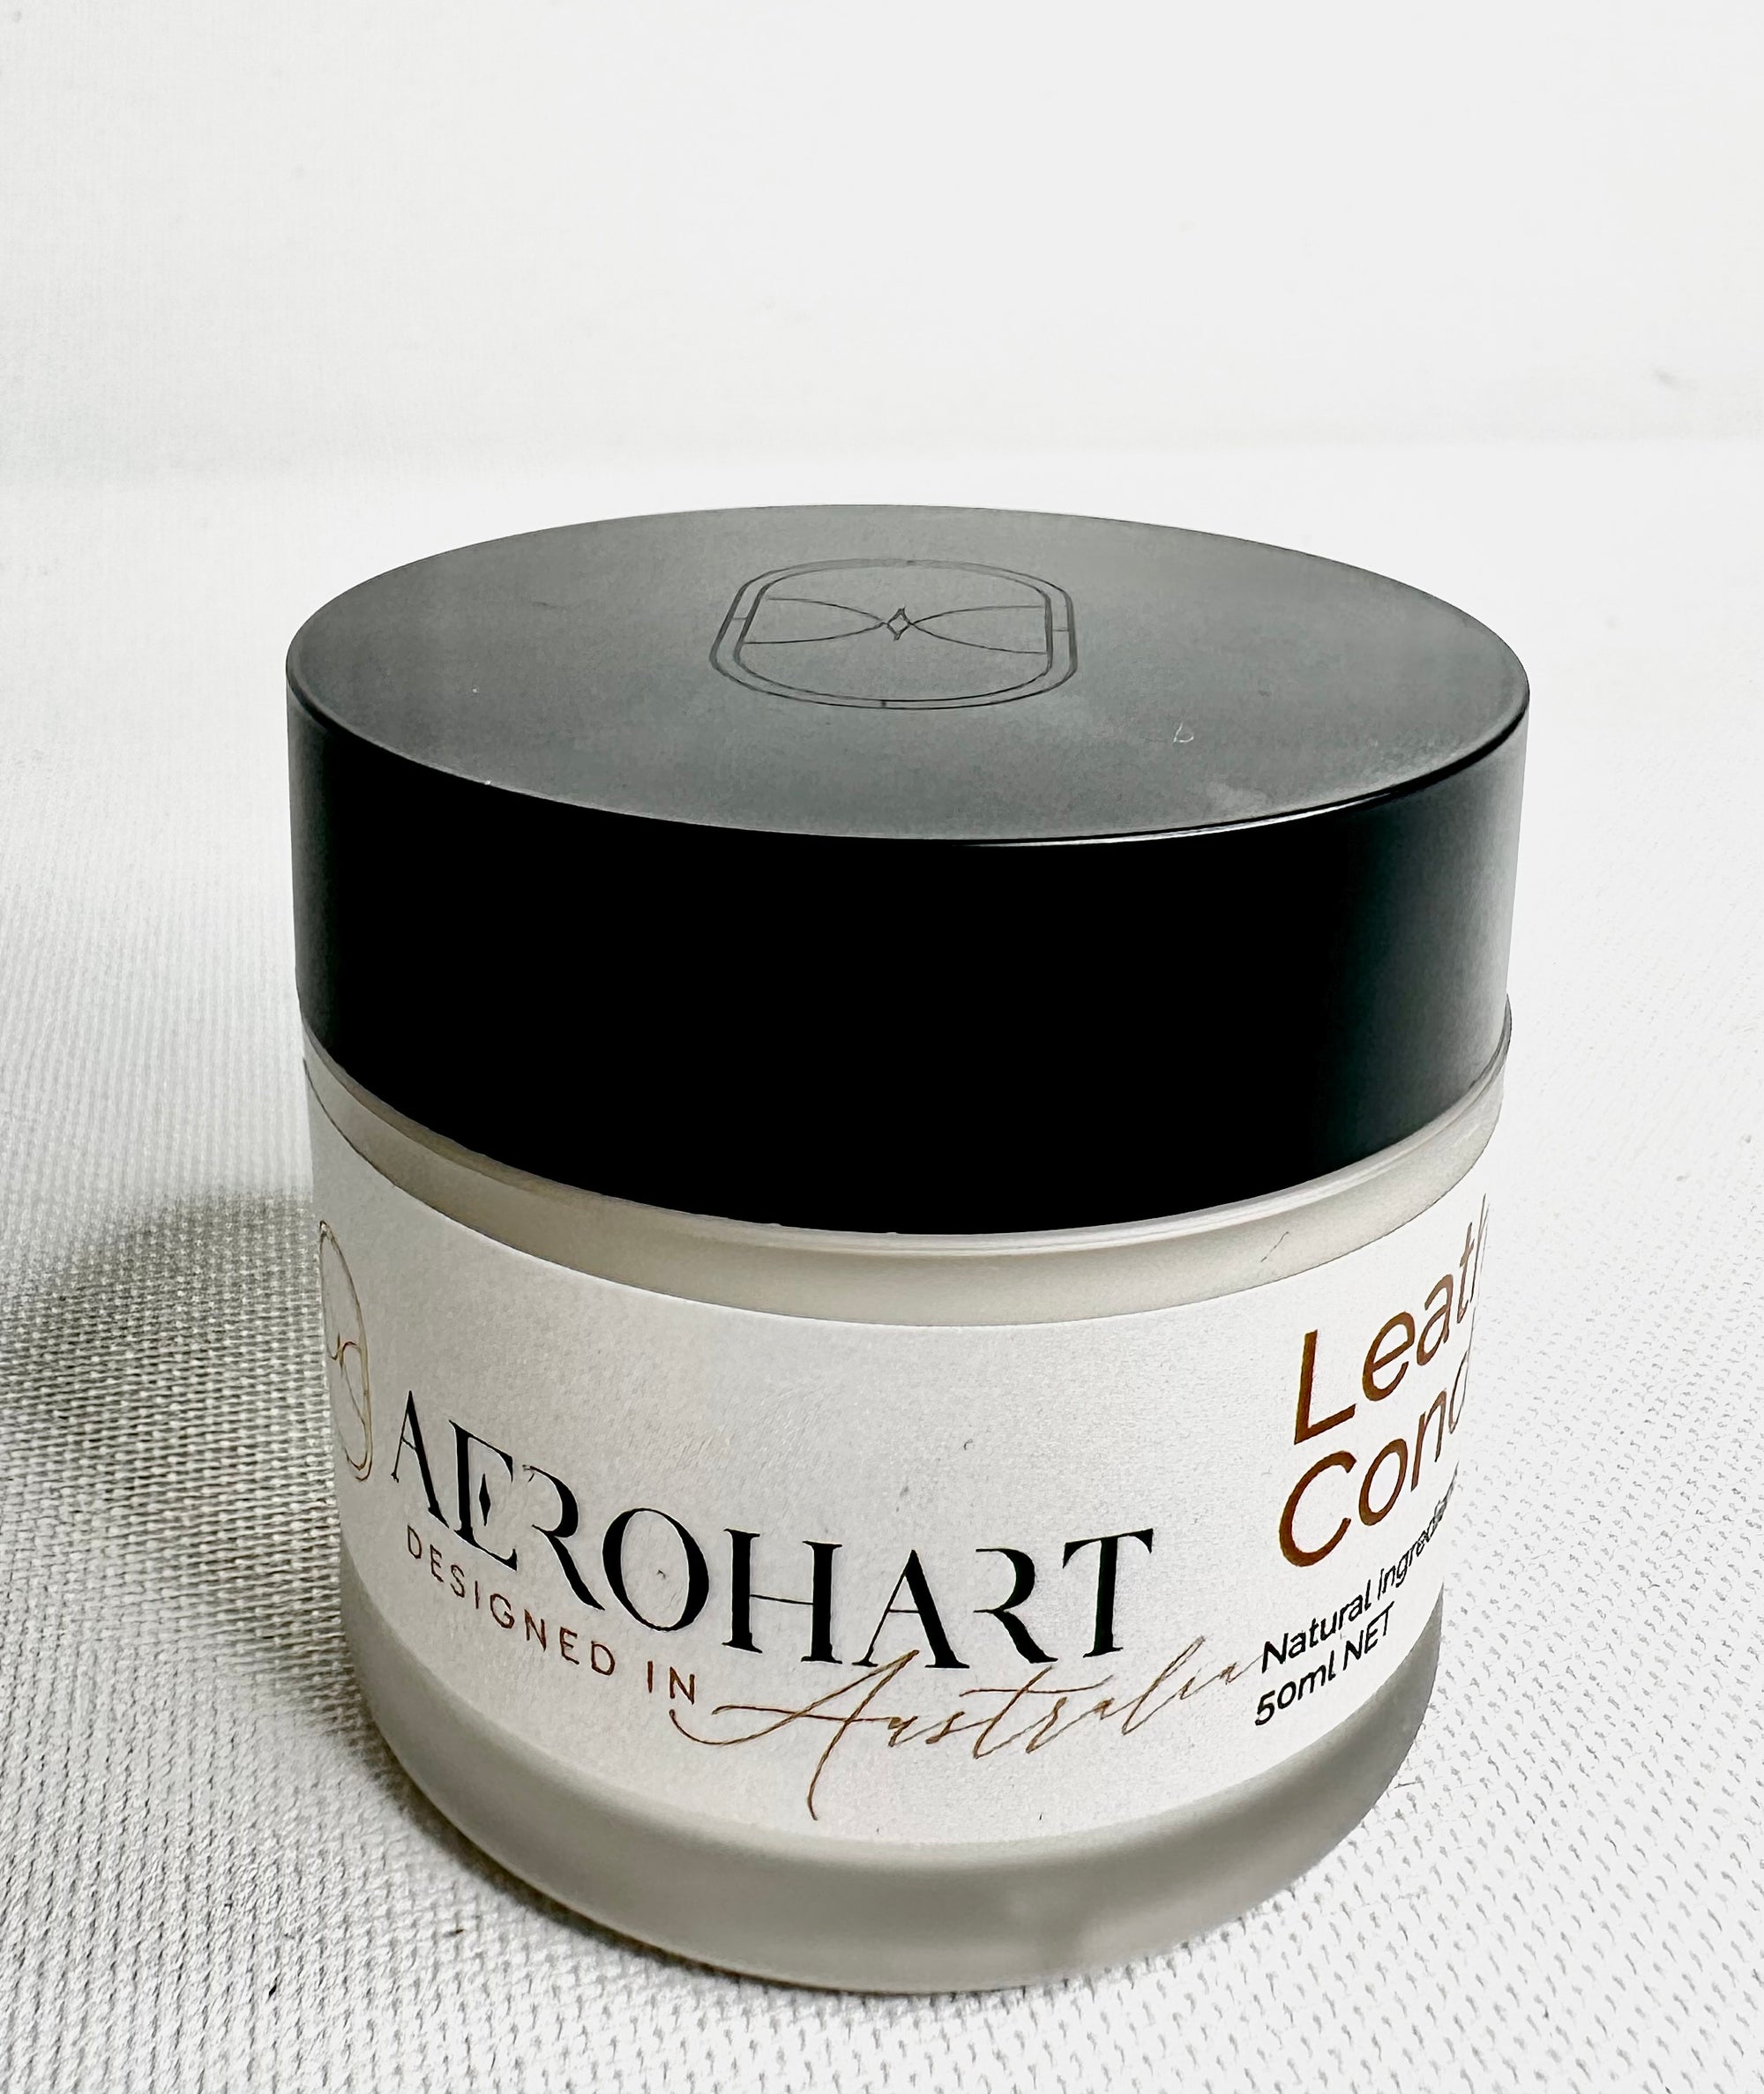 Aerohart Signature Leather Care Kit | Jillian